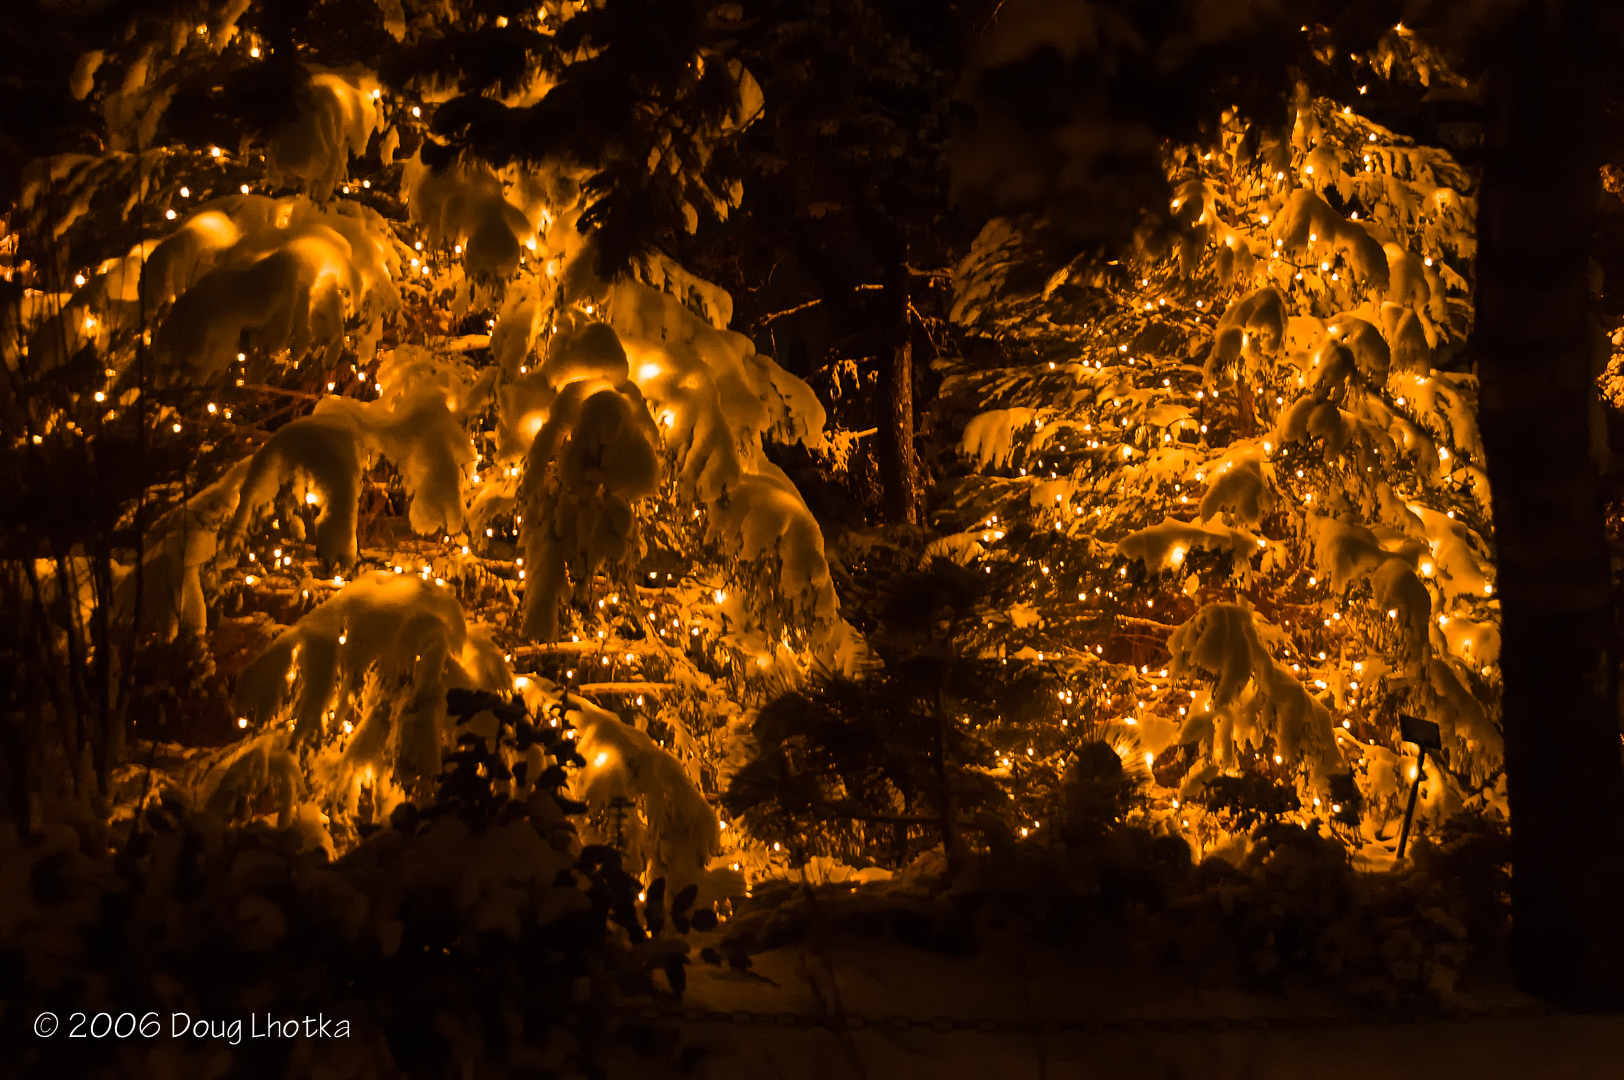 Friday Photo - Merry Christmas from the Denver Botanic Gardens